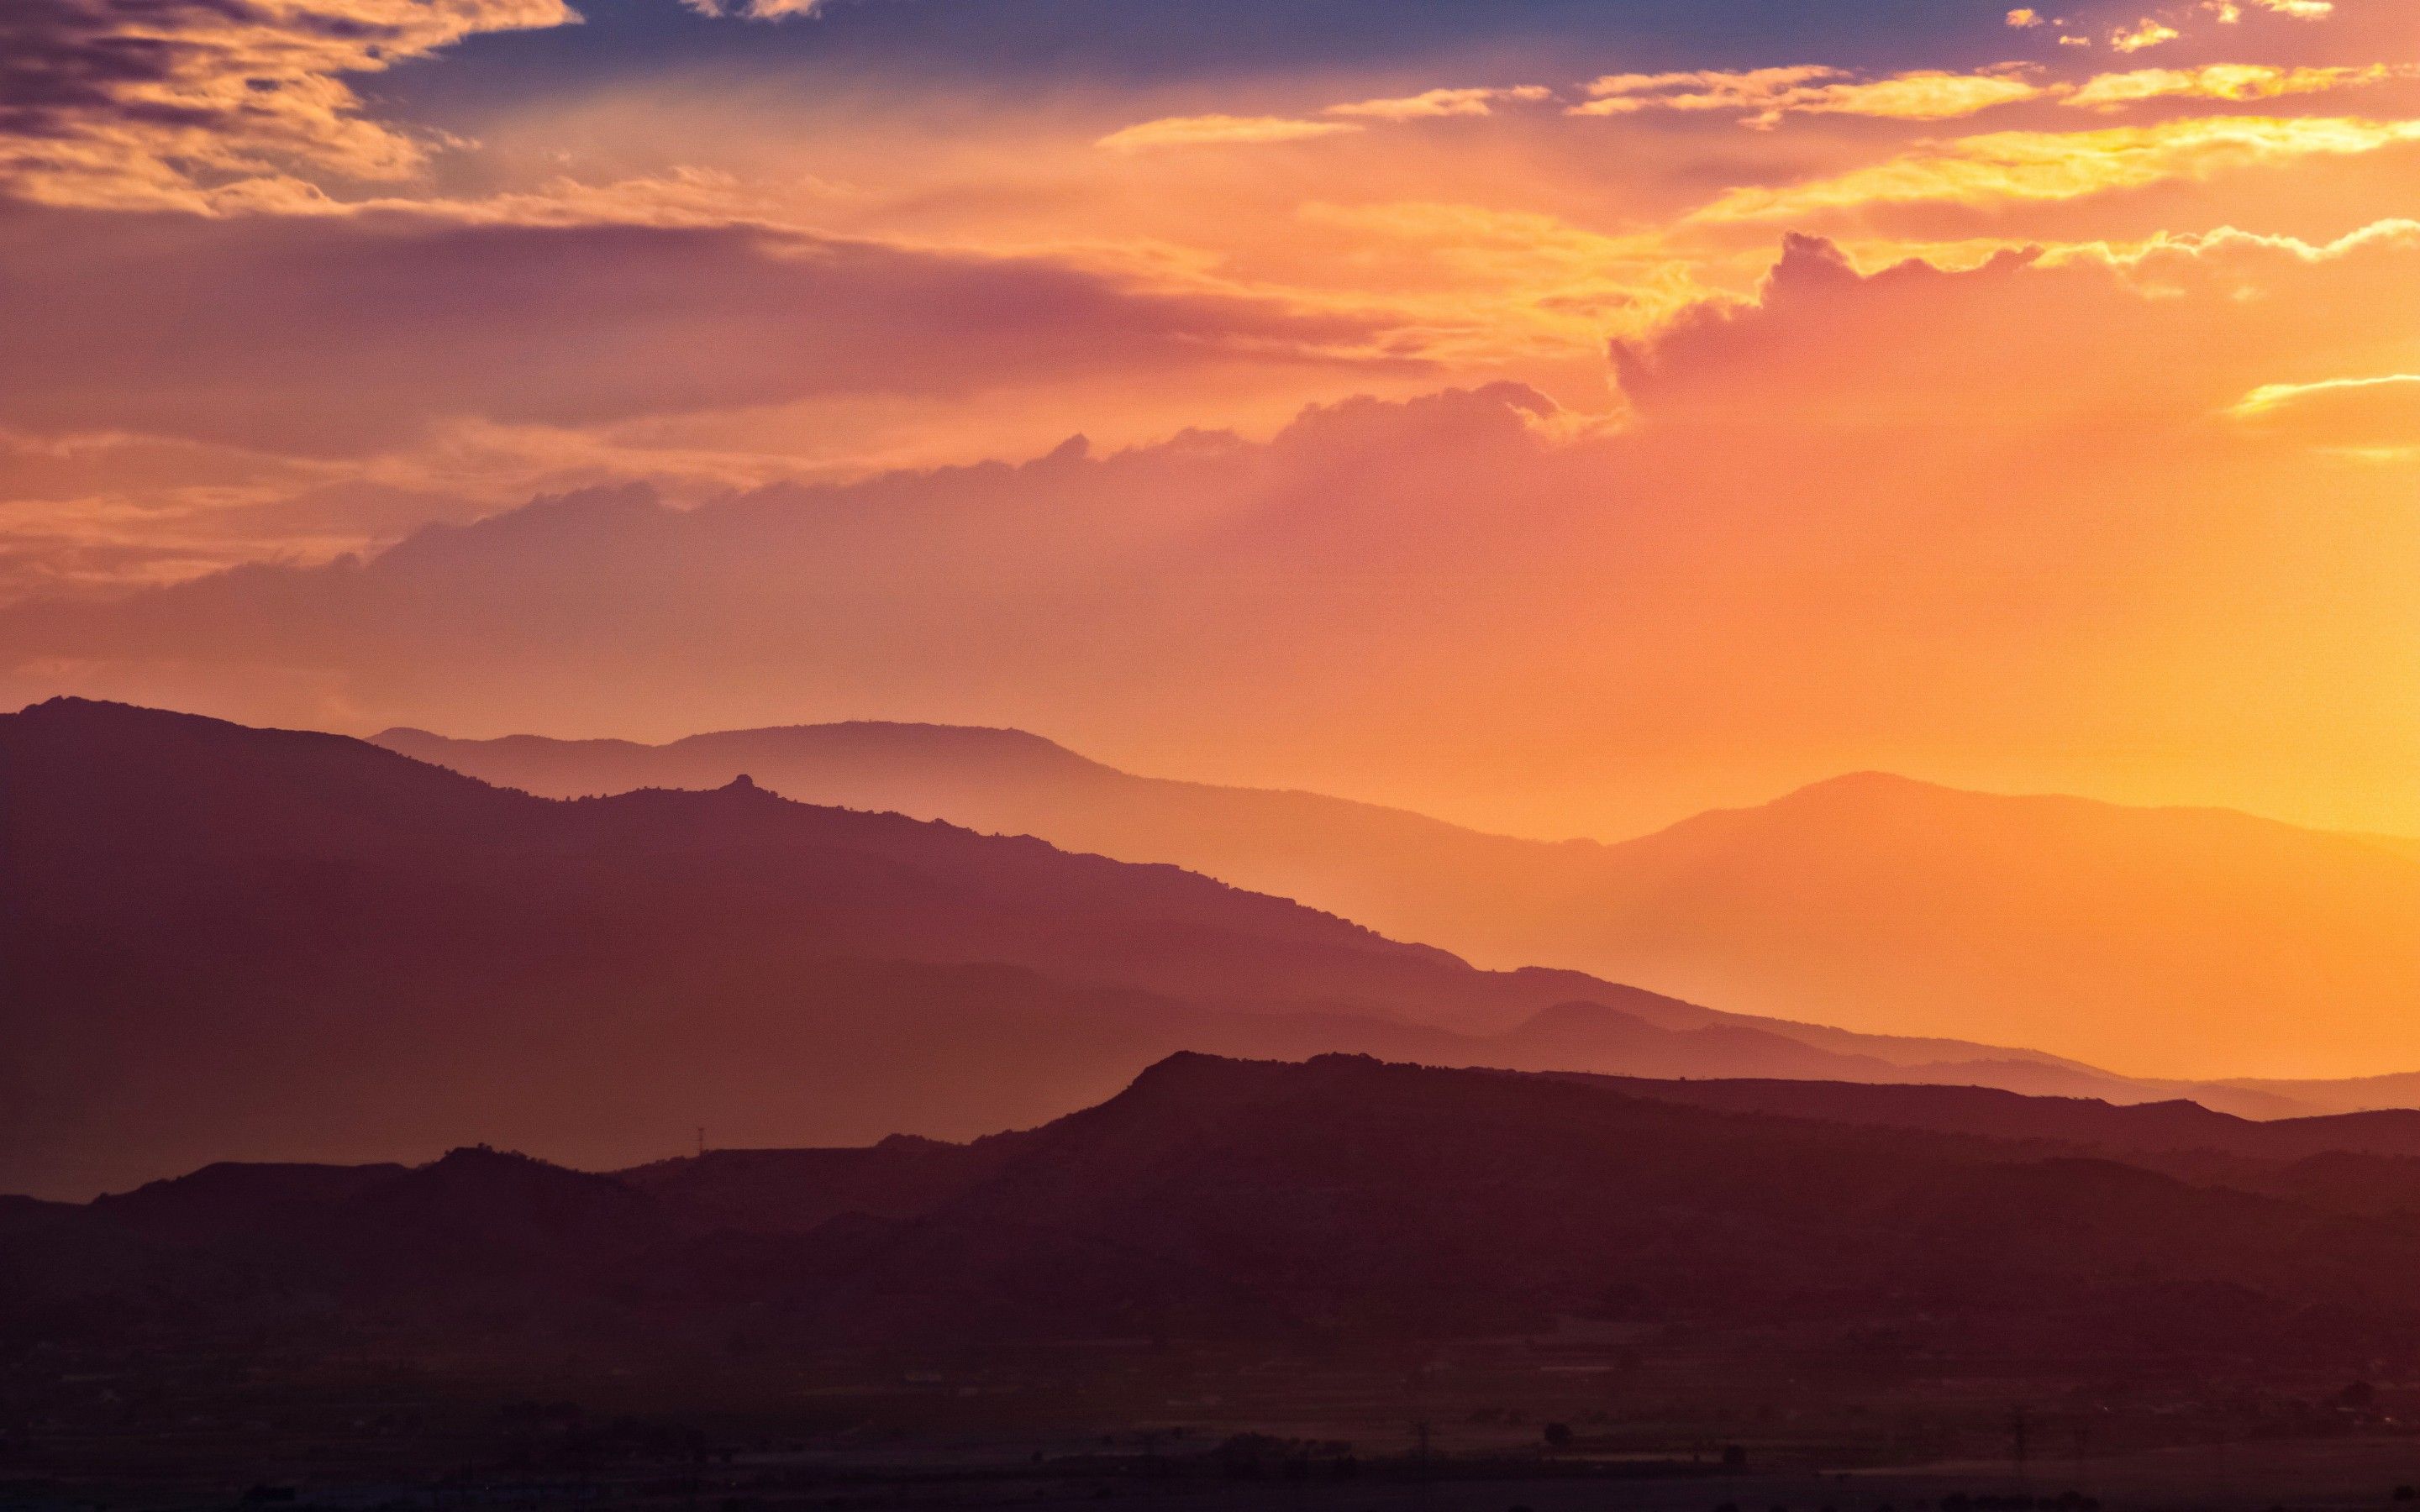 Sunset 4K Wallpaper, Mountain range, Silhouette, Landscape, Orange Sky, Clouds, Sun light, 5K, Nature